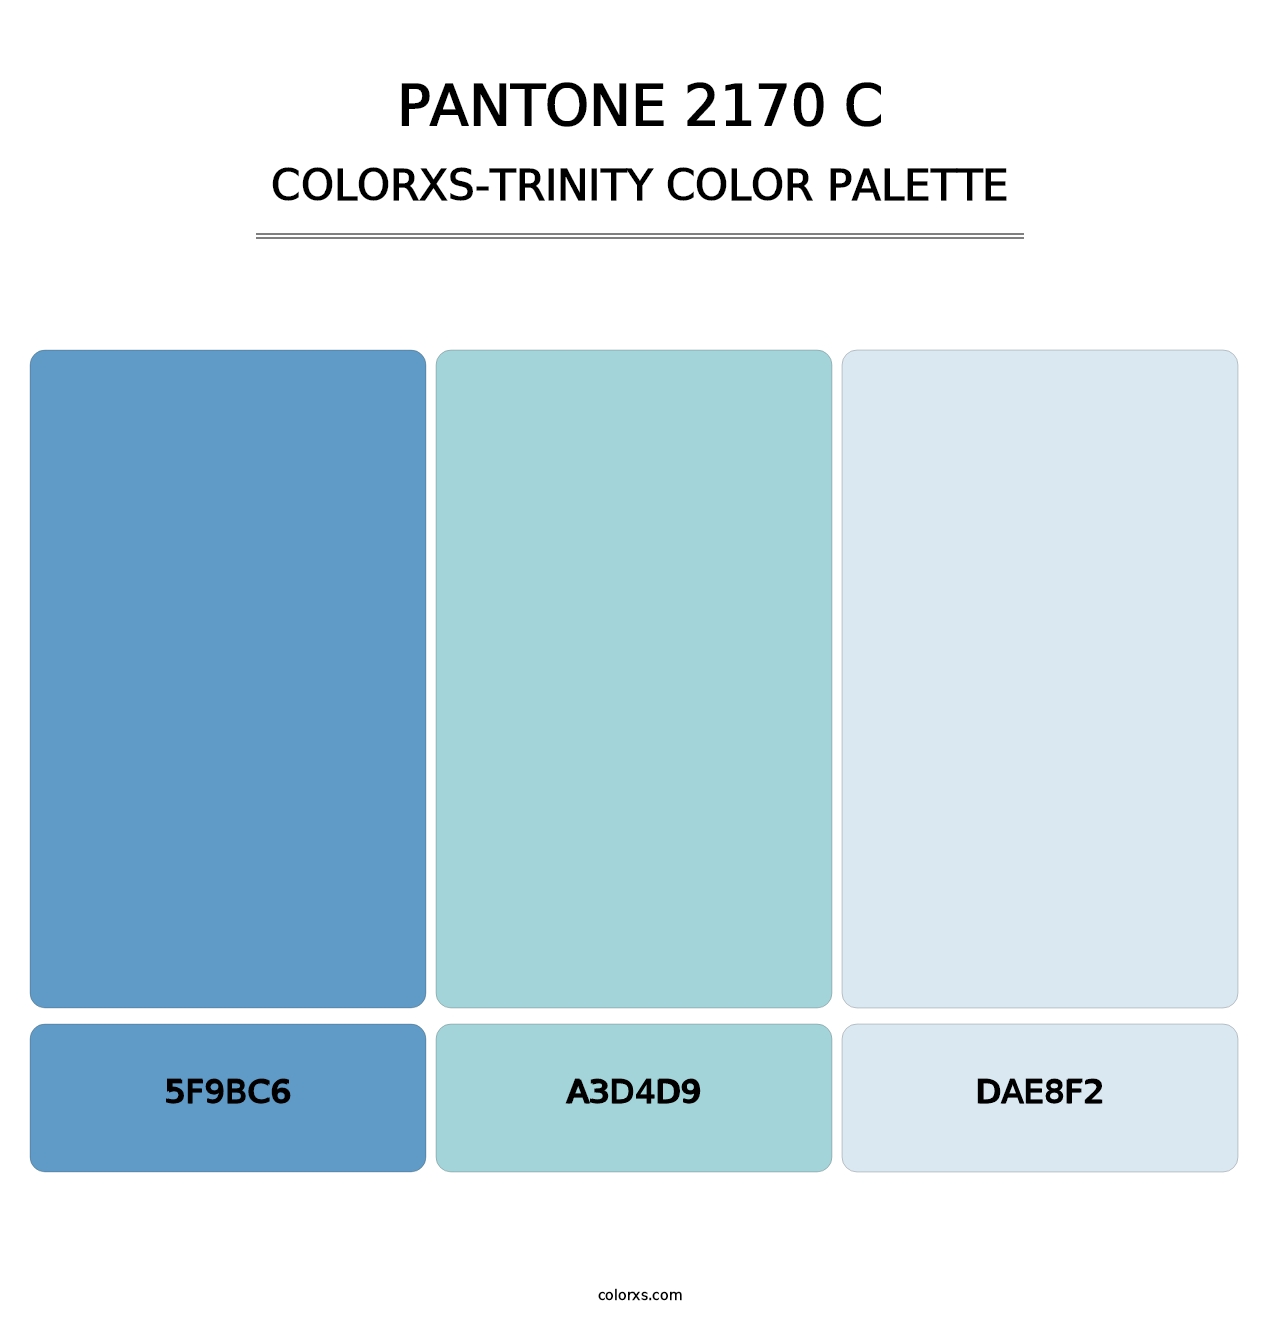 PANTONE 2170 C - Colorxs Trinity Palette